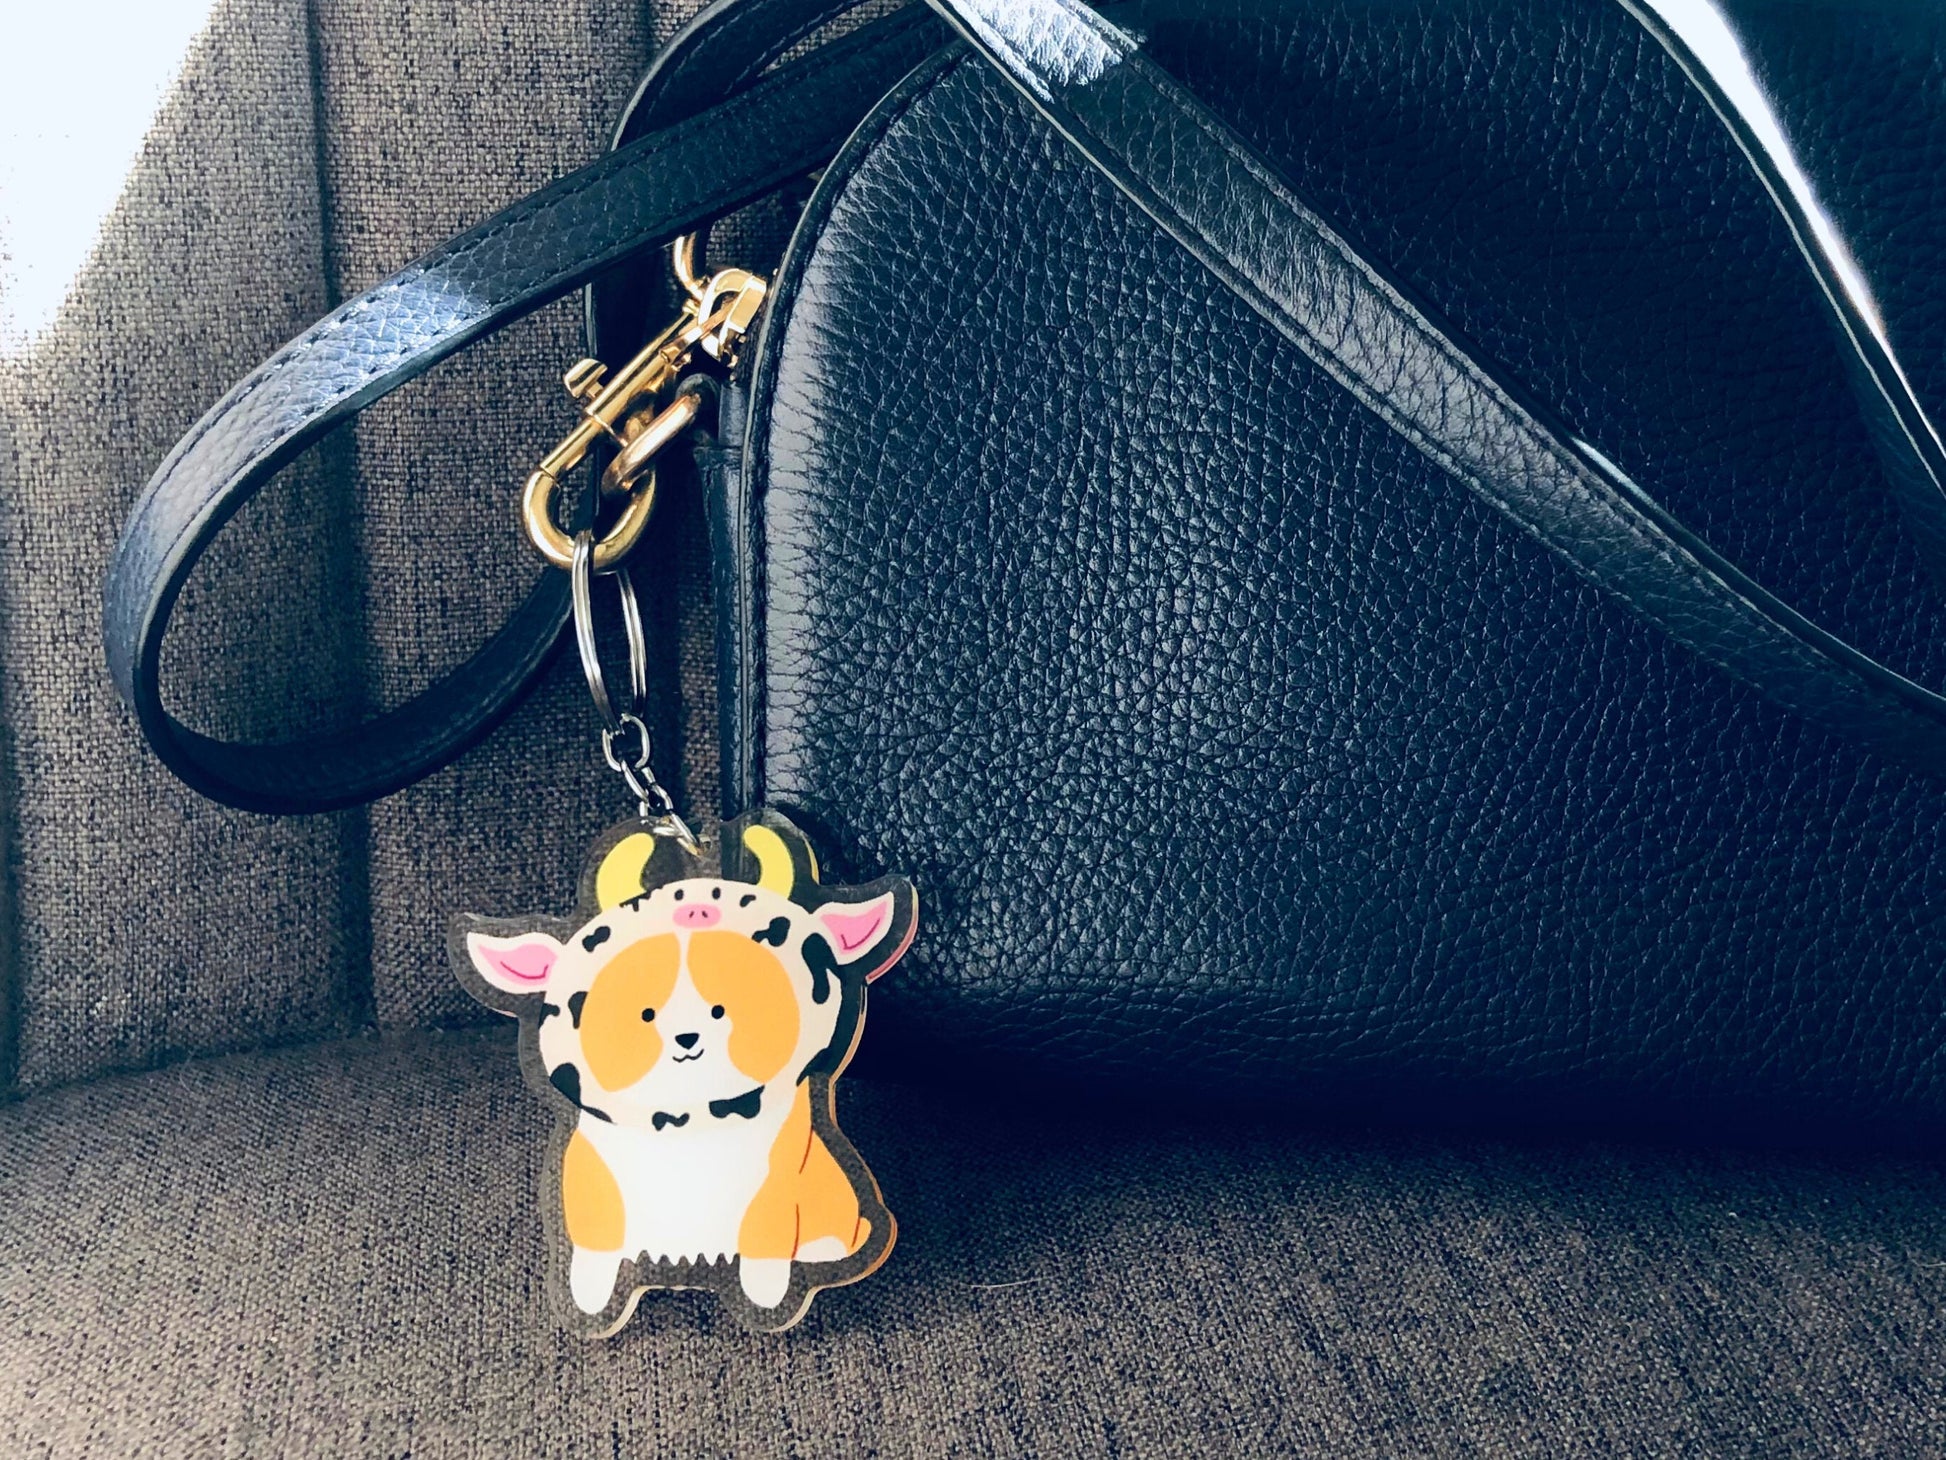 Corgi Costume Acrylic Keychain | Dog Lover Gift